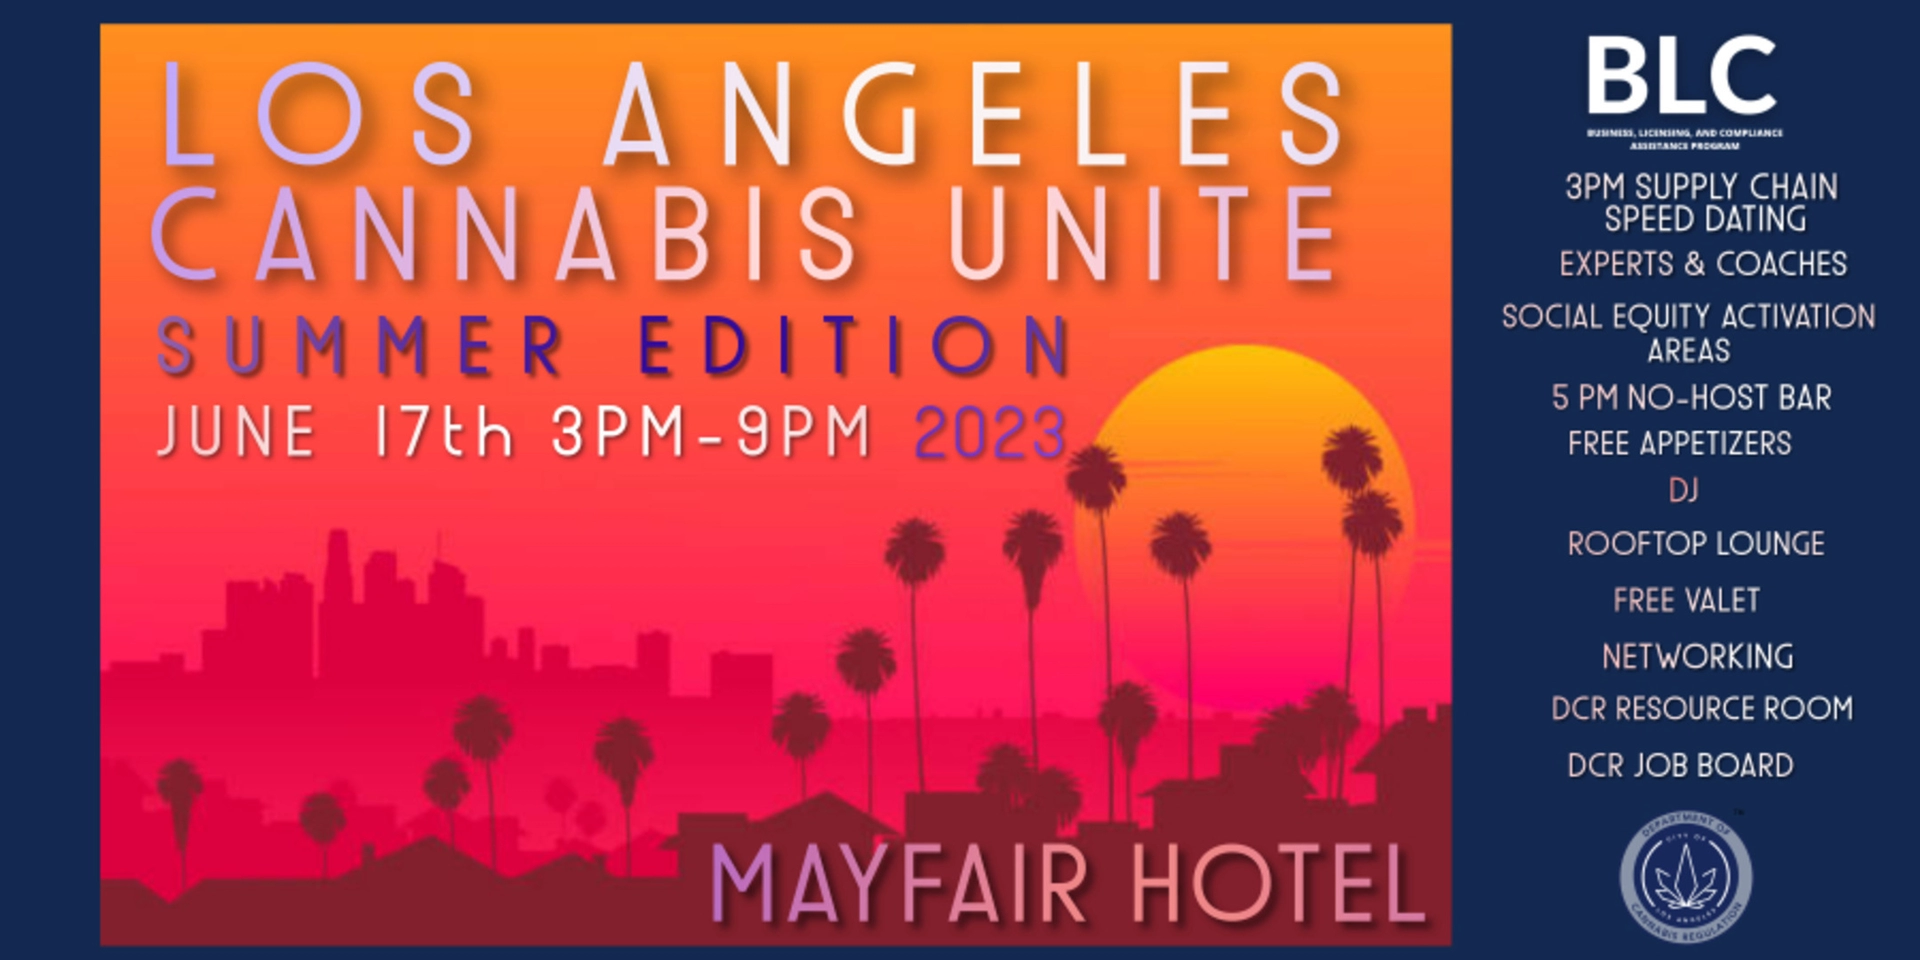 Los Angeles Cannabis UNITE June 17th 3PM - 9PM 2023